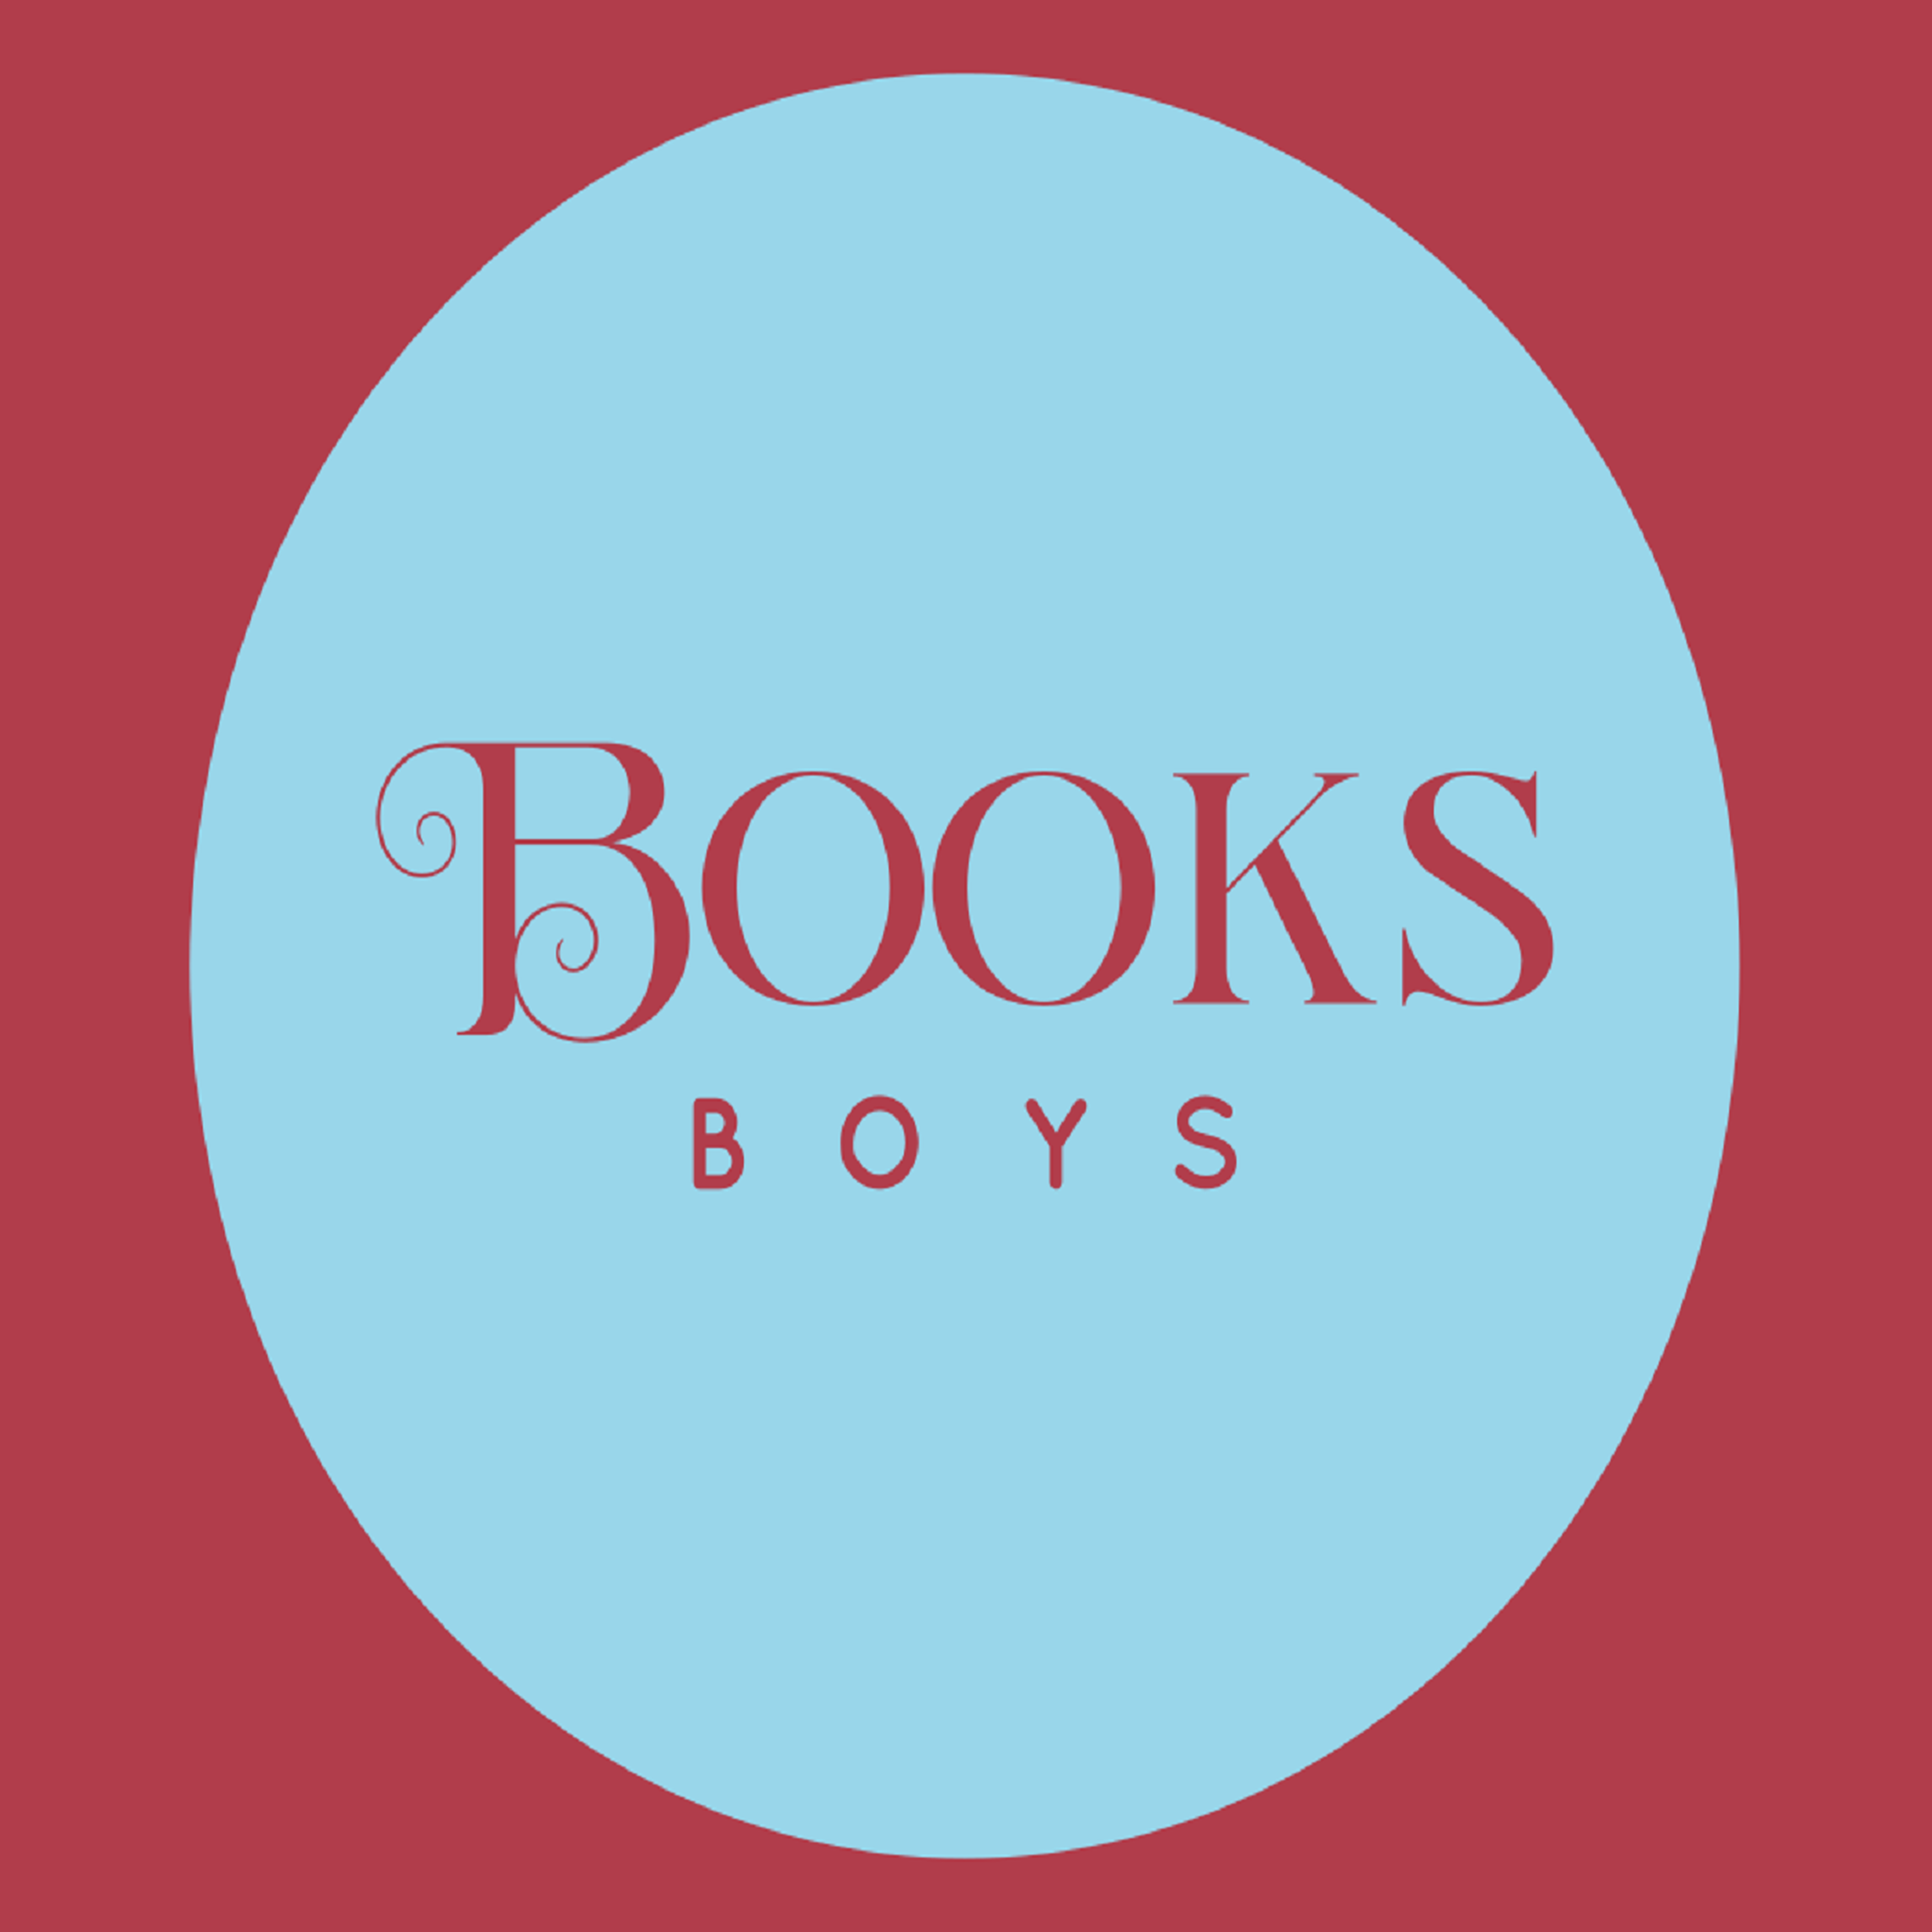 Books Boys Bonus: Michael Pellegrino Interview